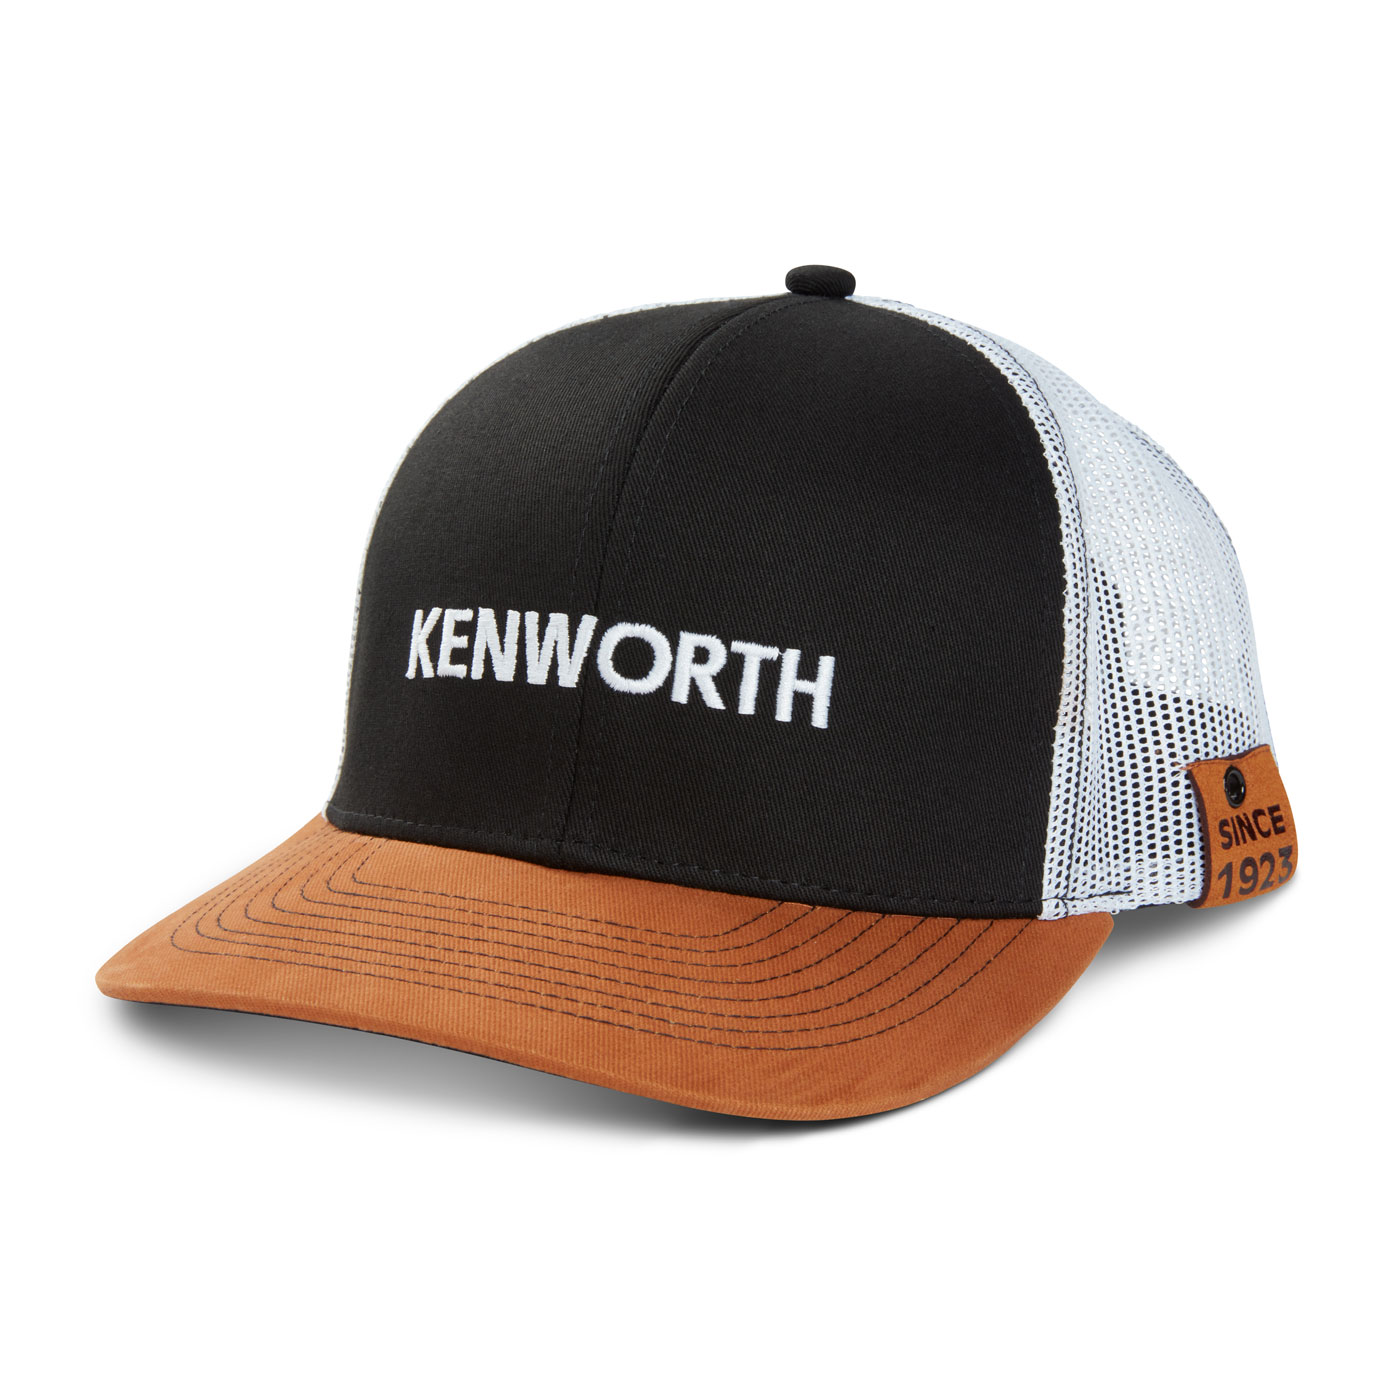 KENWORTH SANDED TWILL HAT